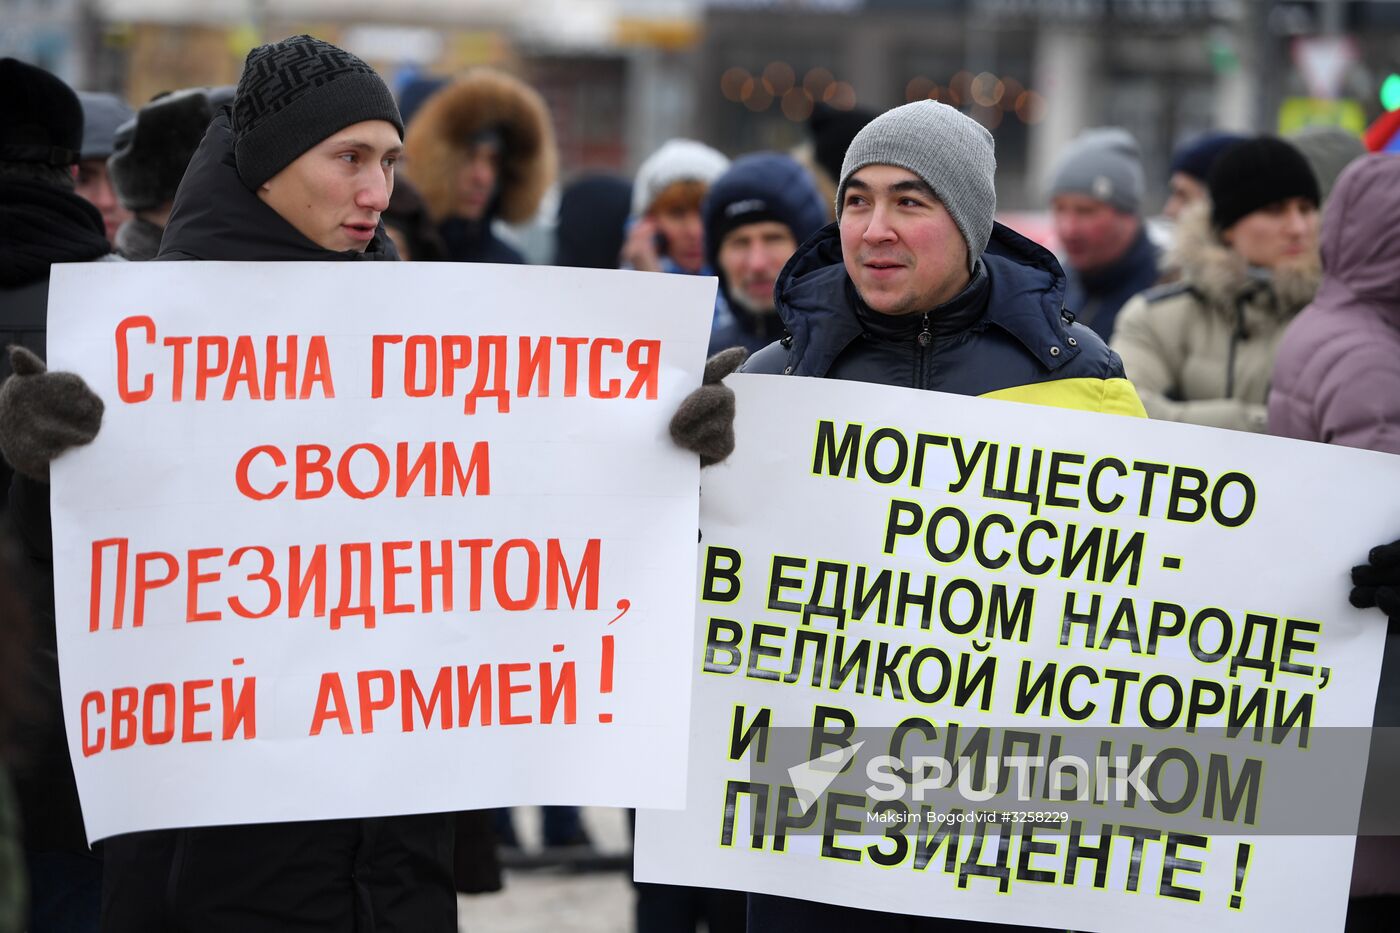 Rally in support of Russian President Vladimir Putin